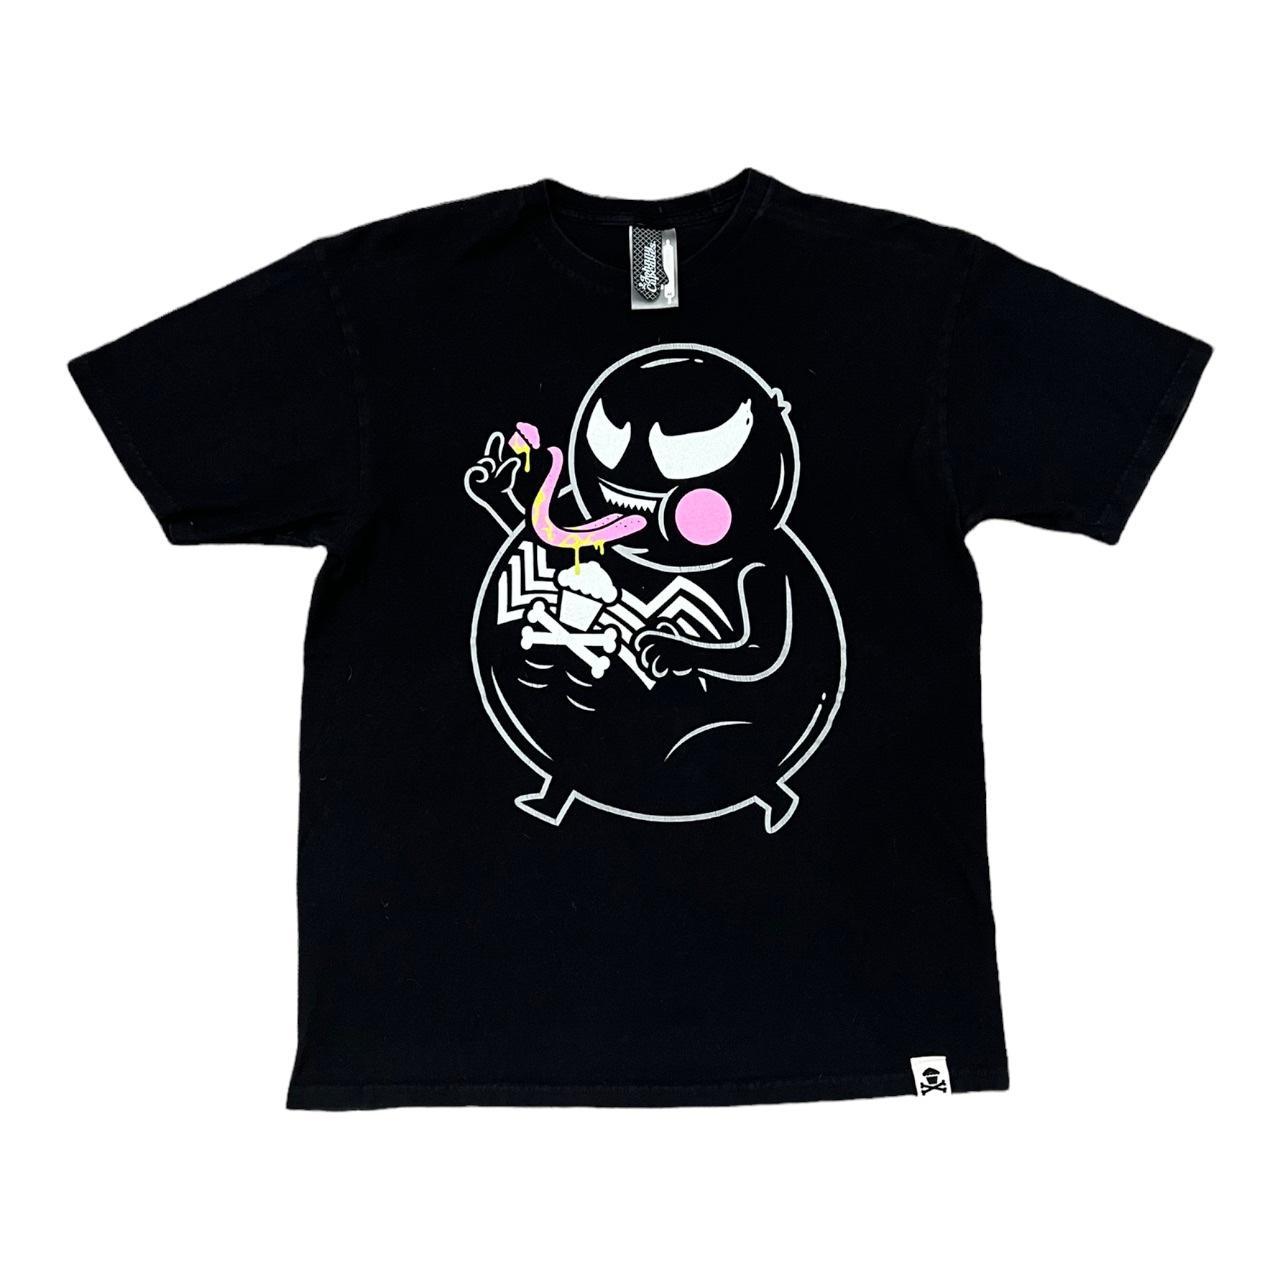 Product Image 1 - Johnny Cupcakes Venom T-Shirt
Size: M